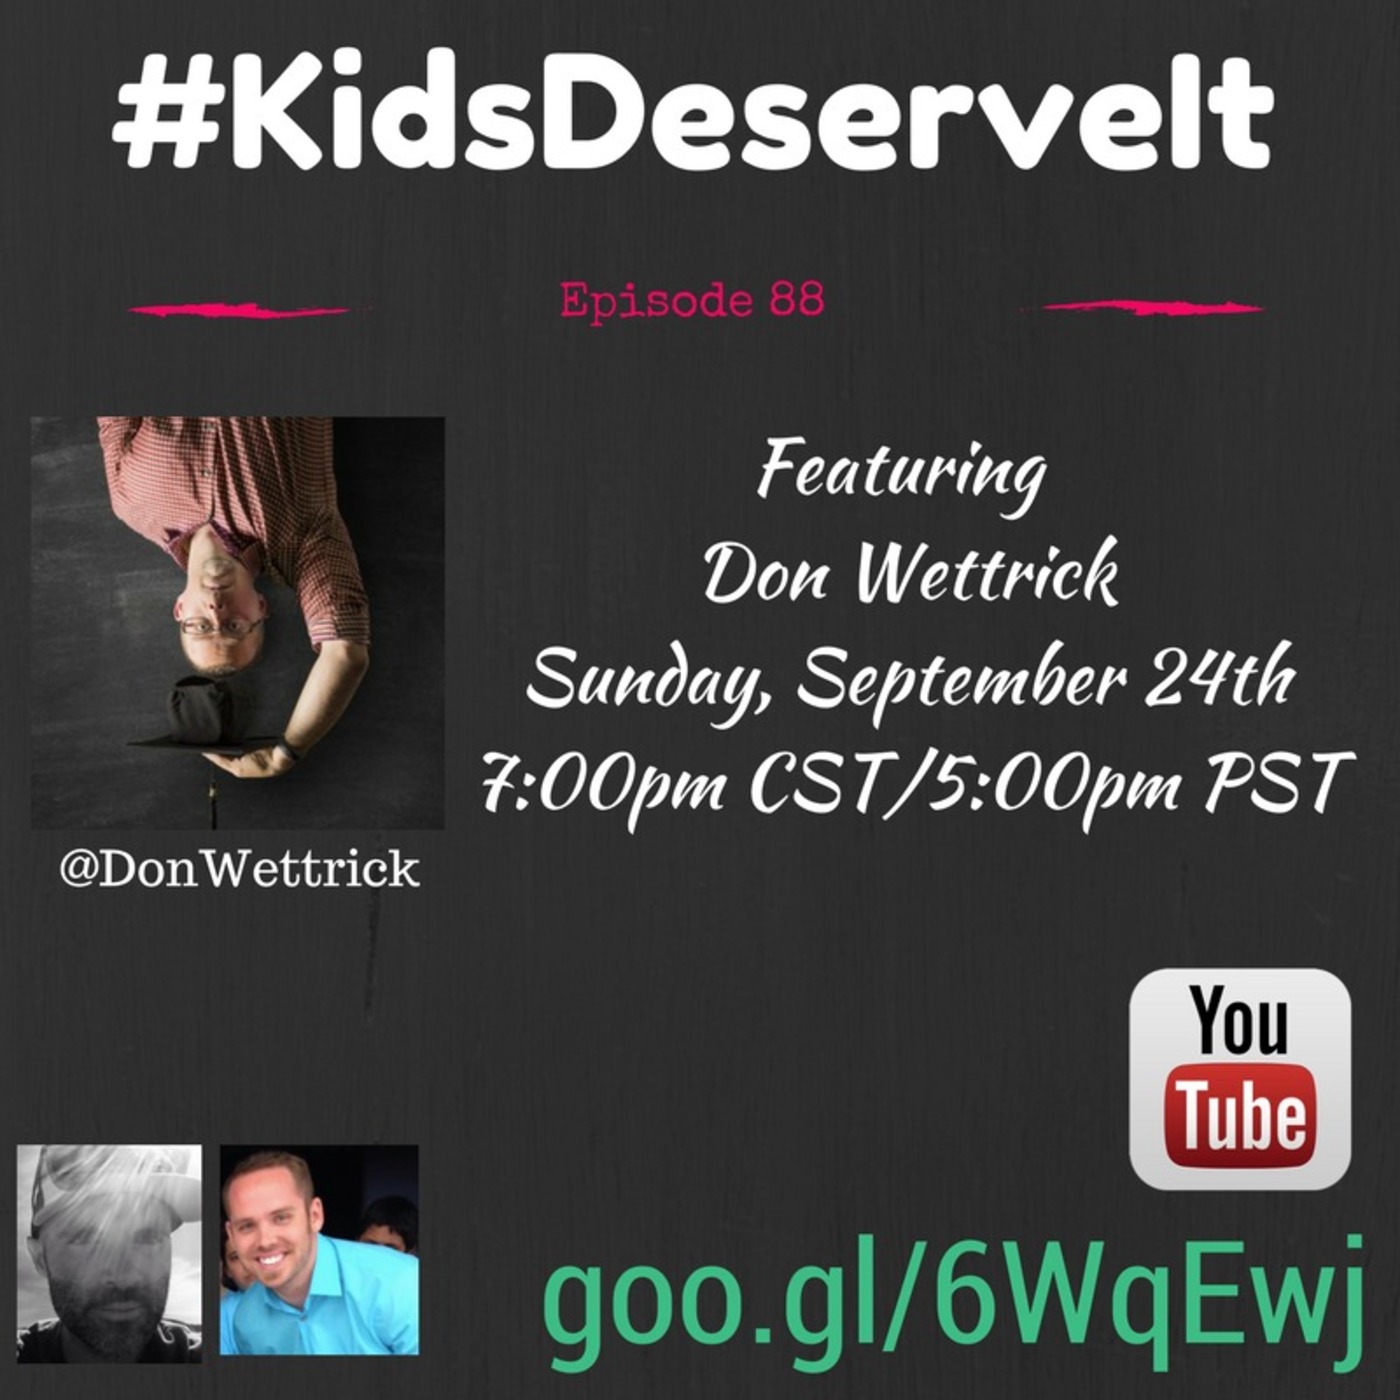 Episode 88 of #KidsDeserveIt with Don Wettrick